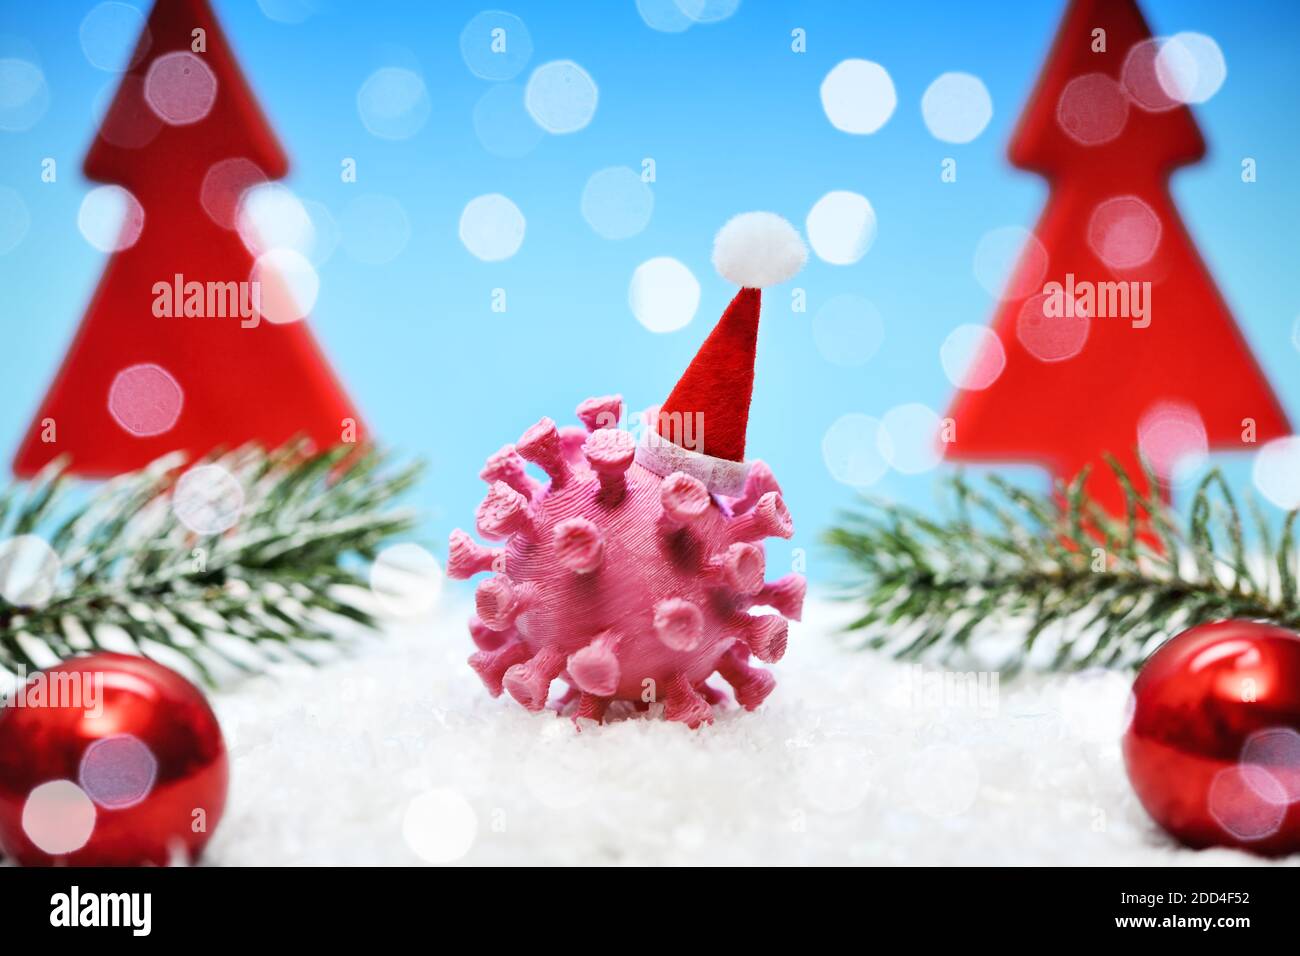 Coronavirus with Santa hat Stock Photo